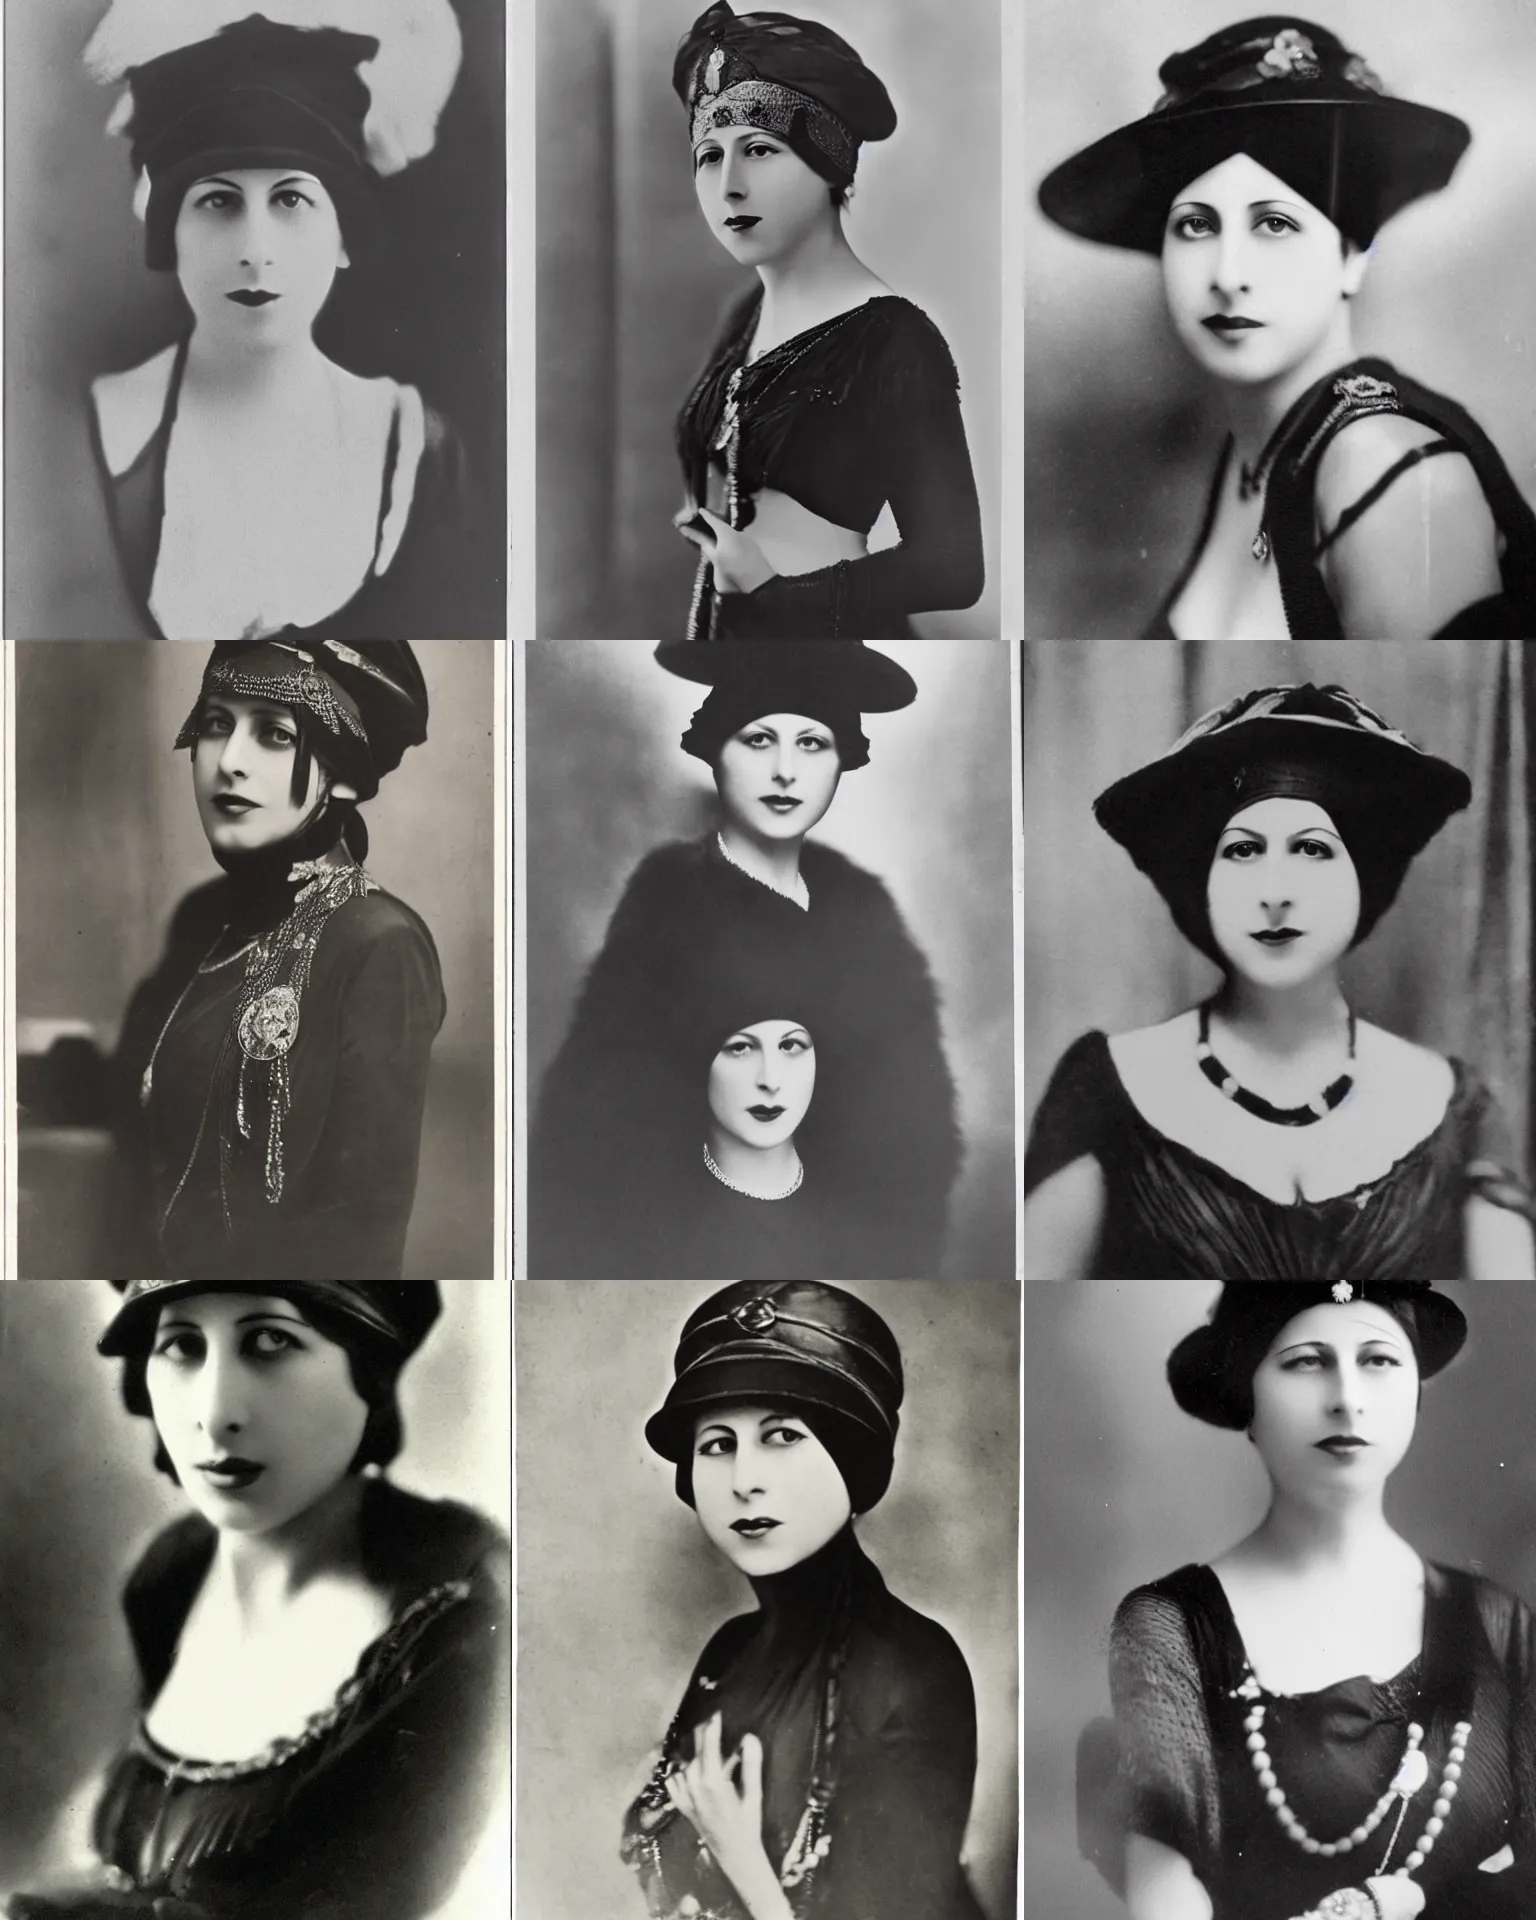 Prompt: Mata Hari as Female investigator, wearing hat, 1920s, portrait